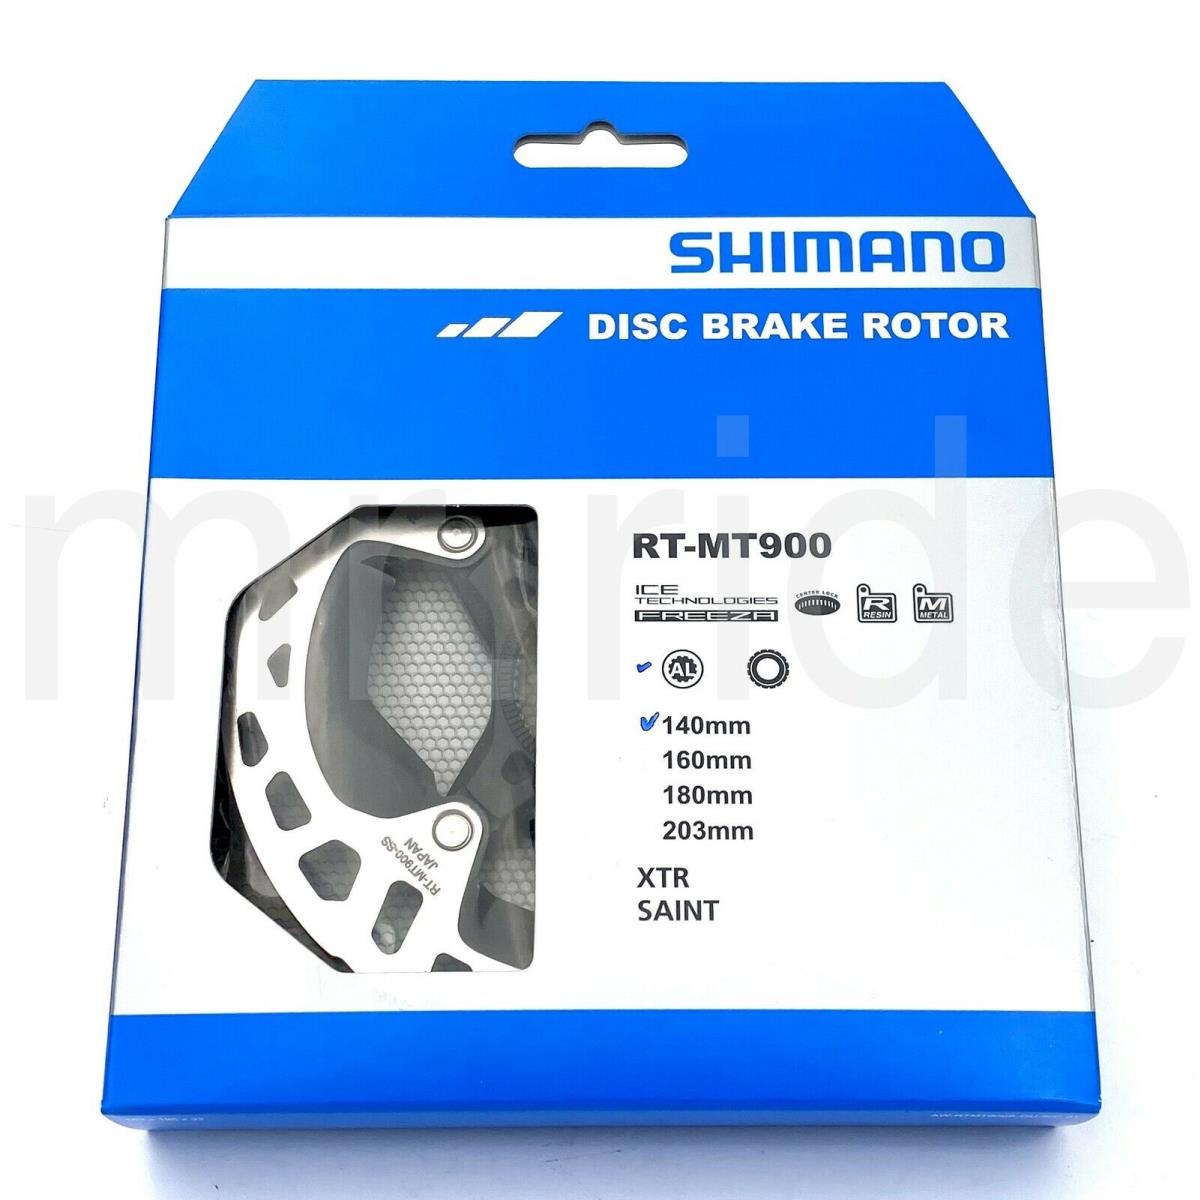 Shimano Xtr/saint Mtb Bike Disc Brake Rotor RT-MT900 140mm Center Lock Ice Tech